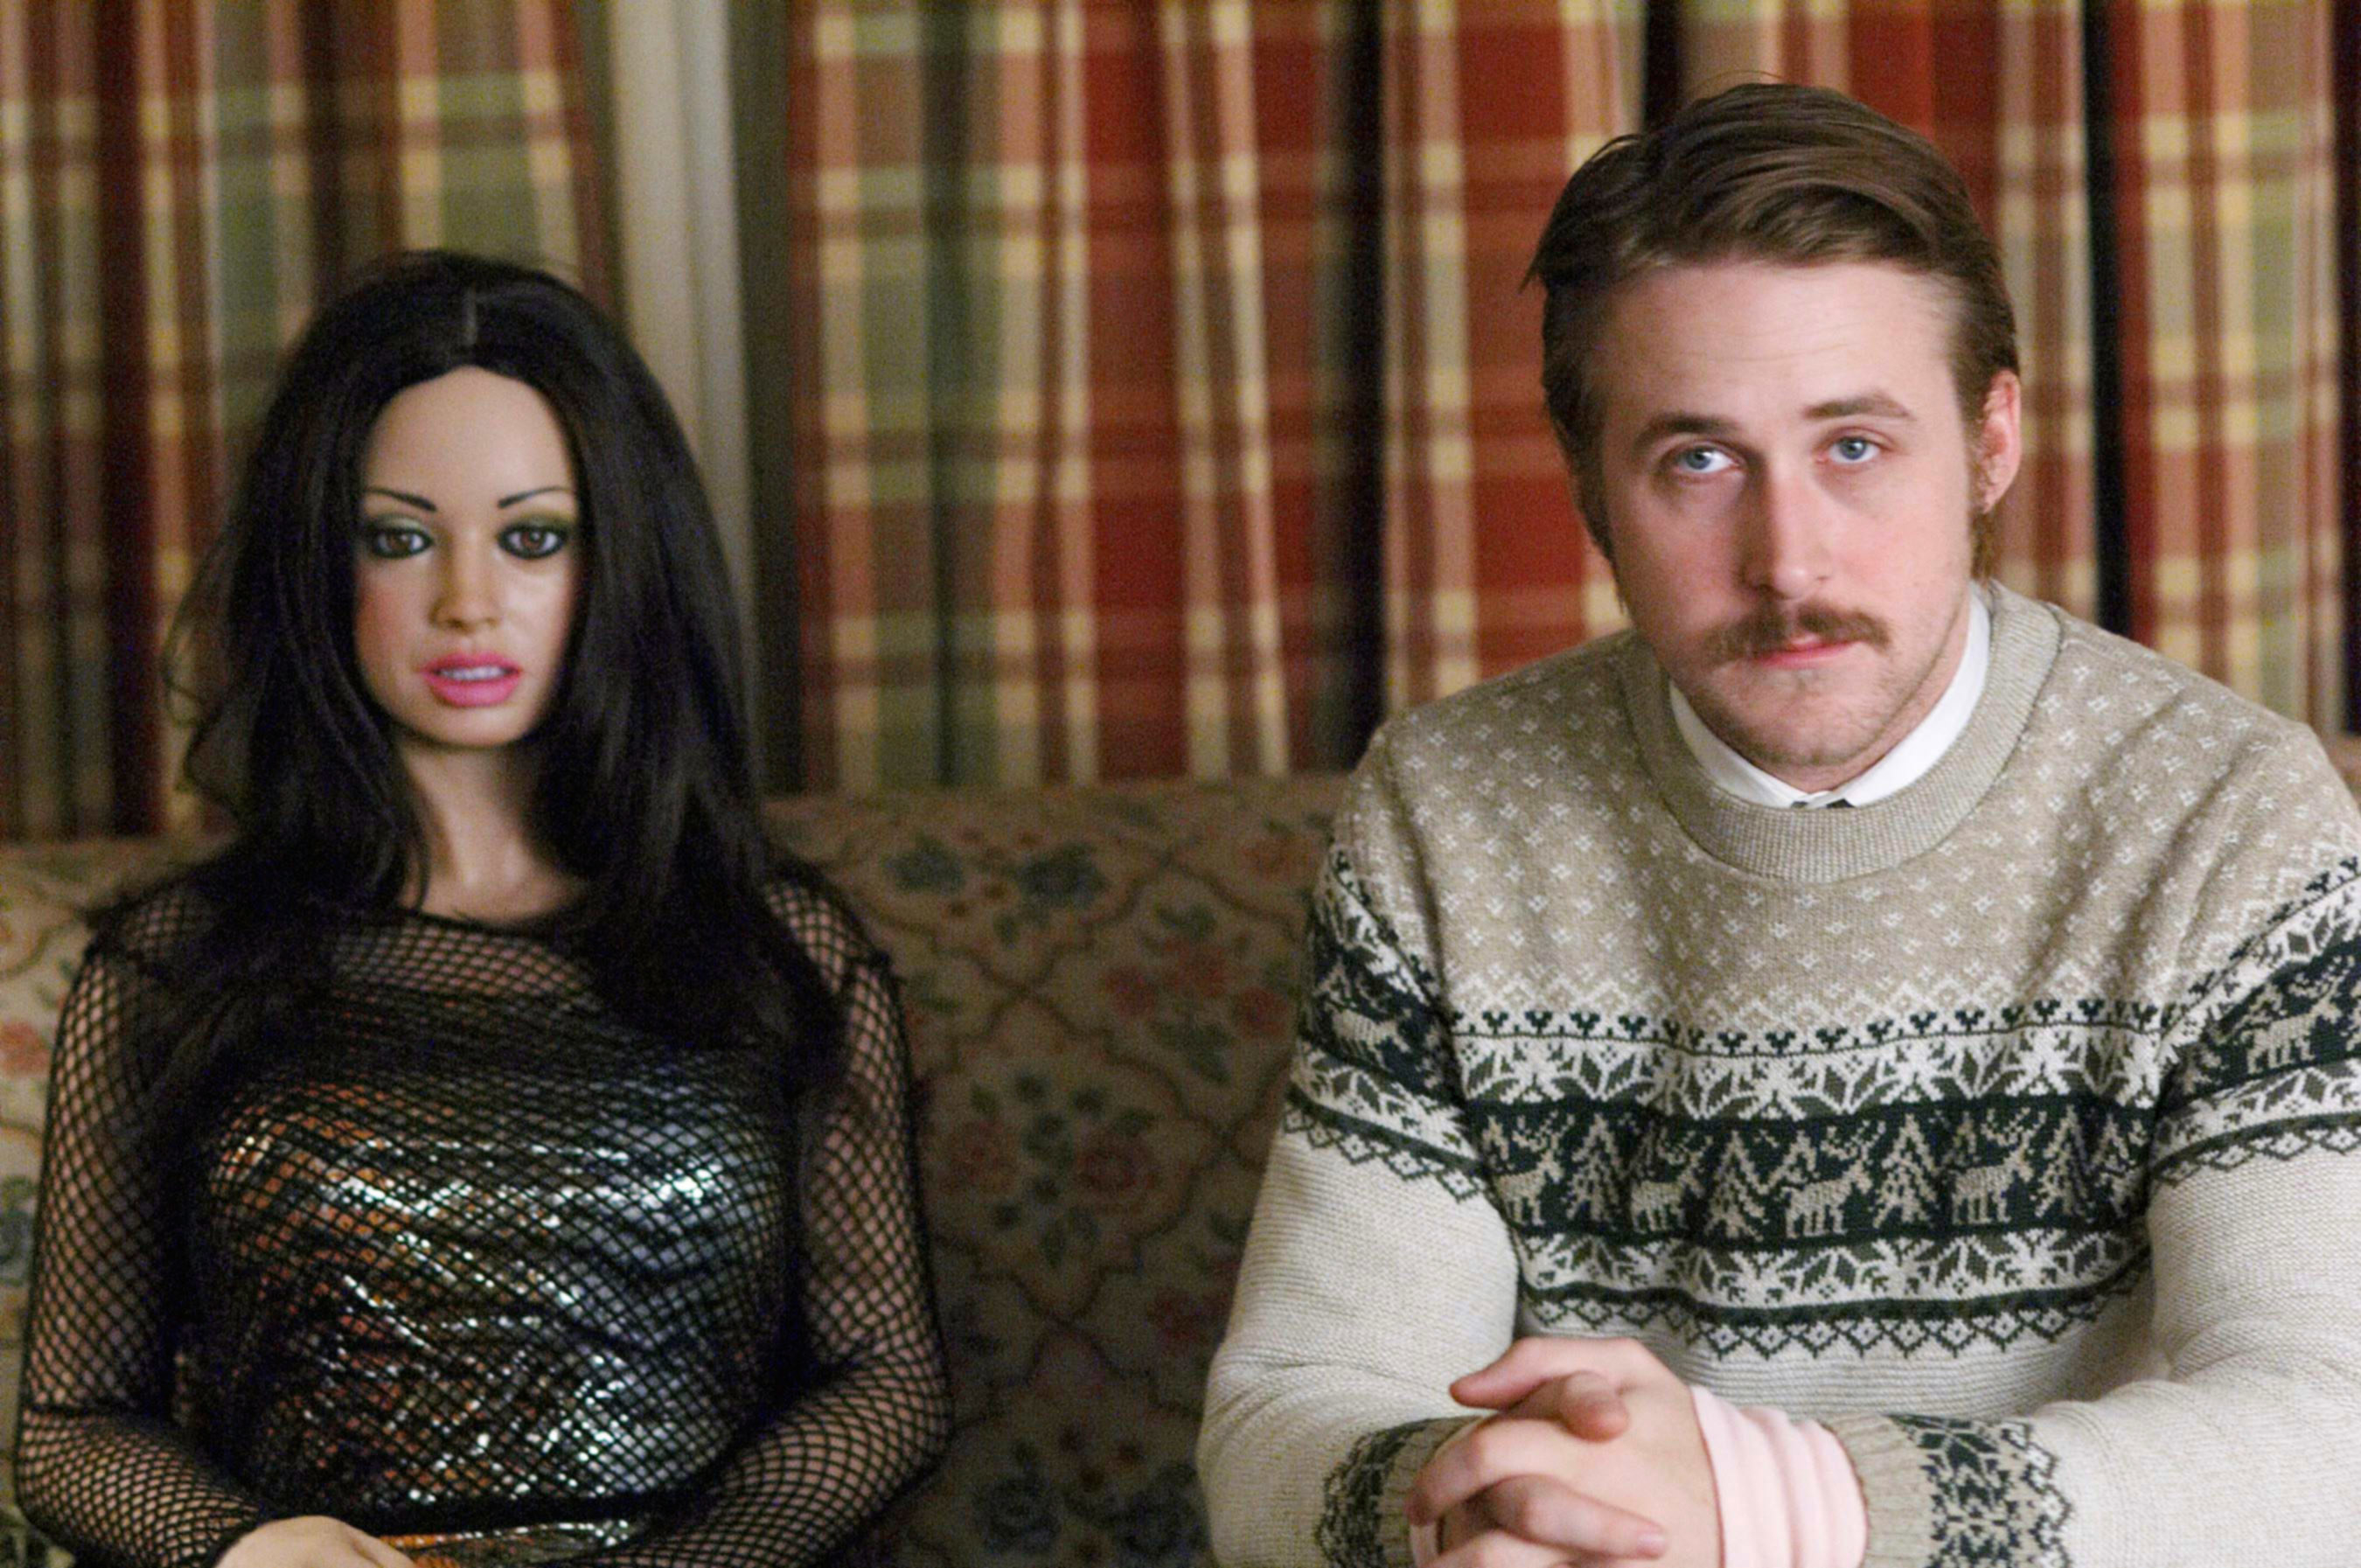 Ryan Gosling sitting next to a doll.